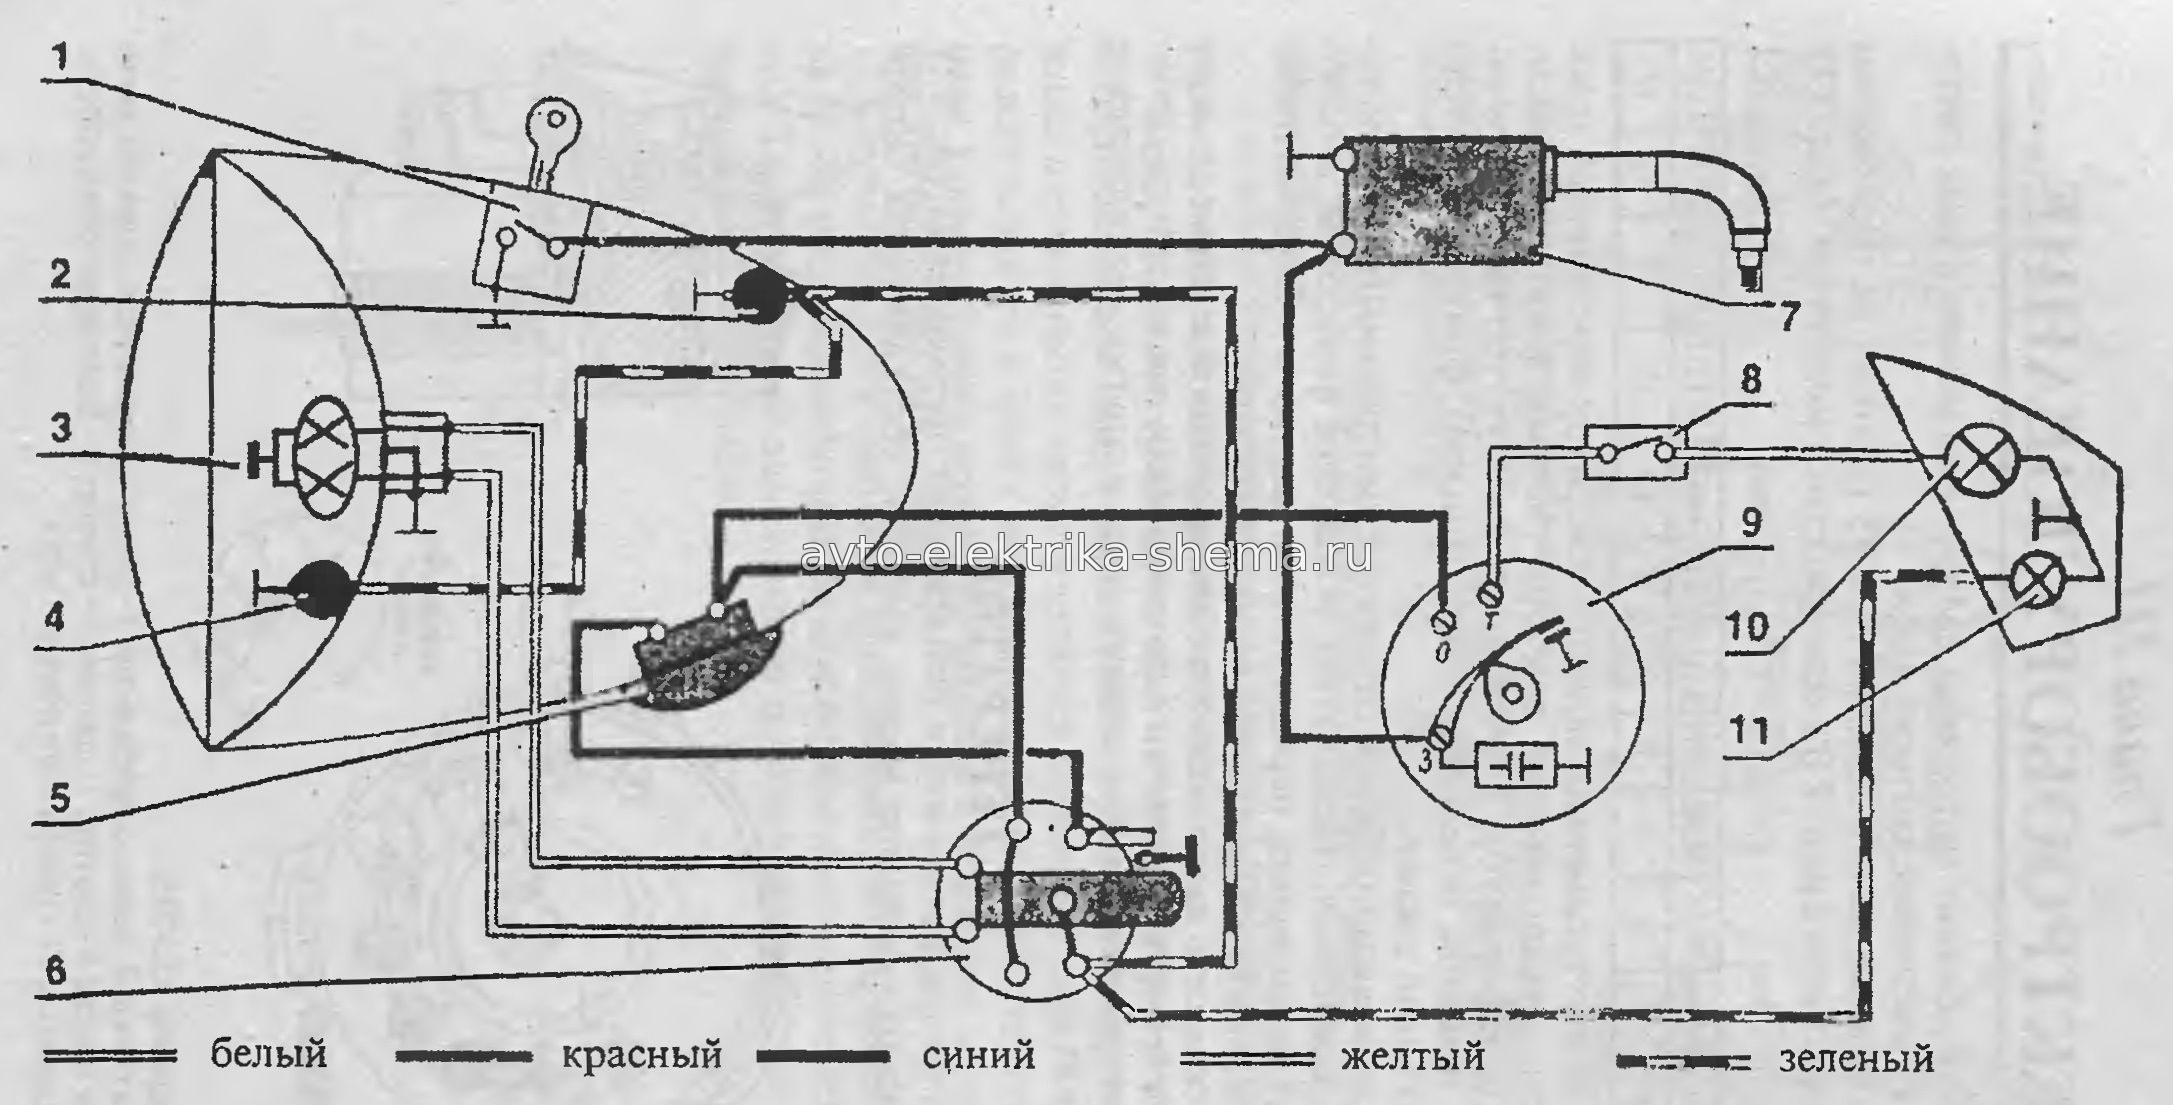 Схема электрооборудования мотоциклов М-103, М-104, М-105, М-106